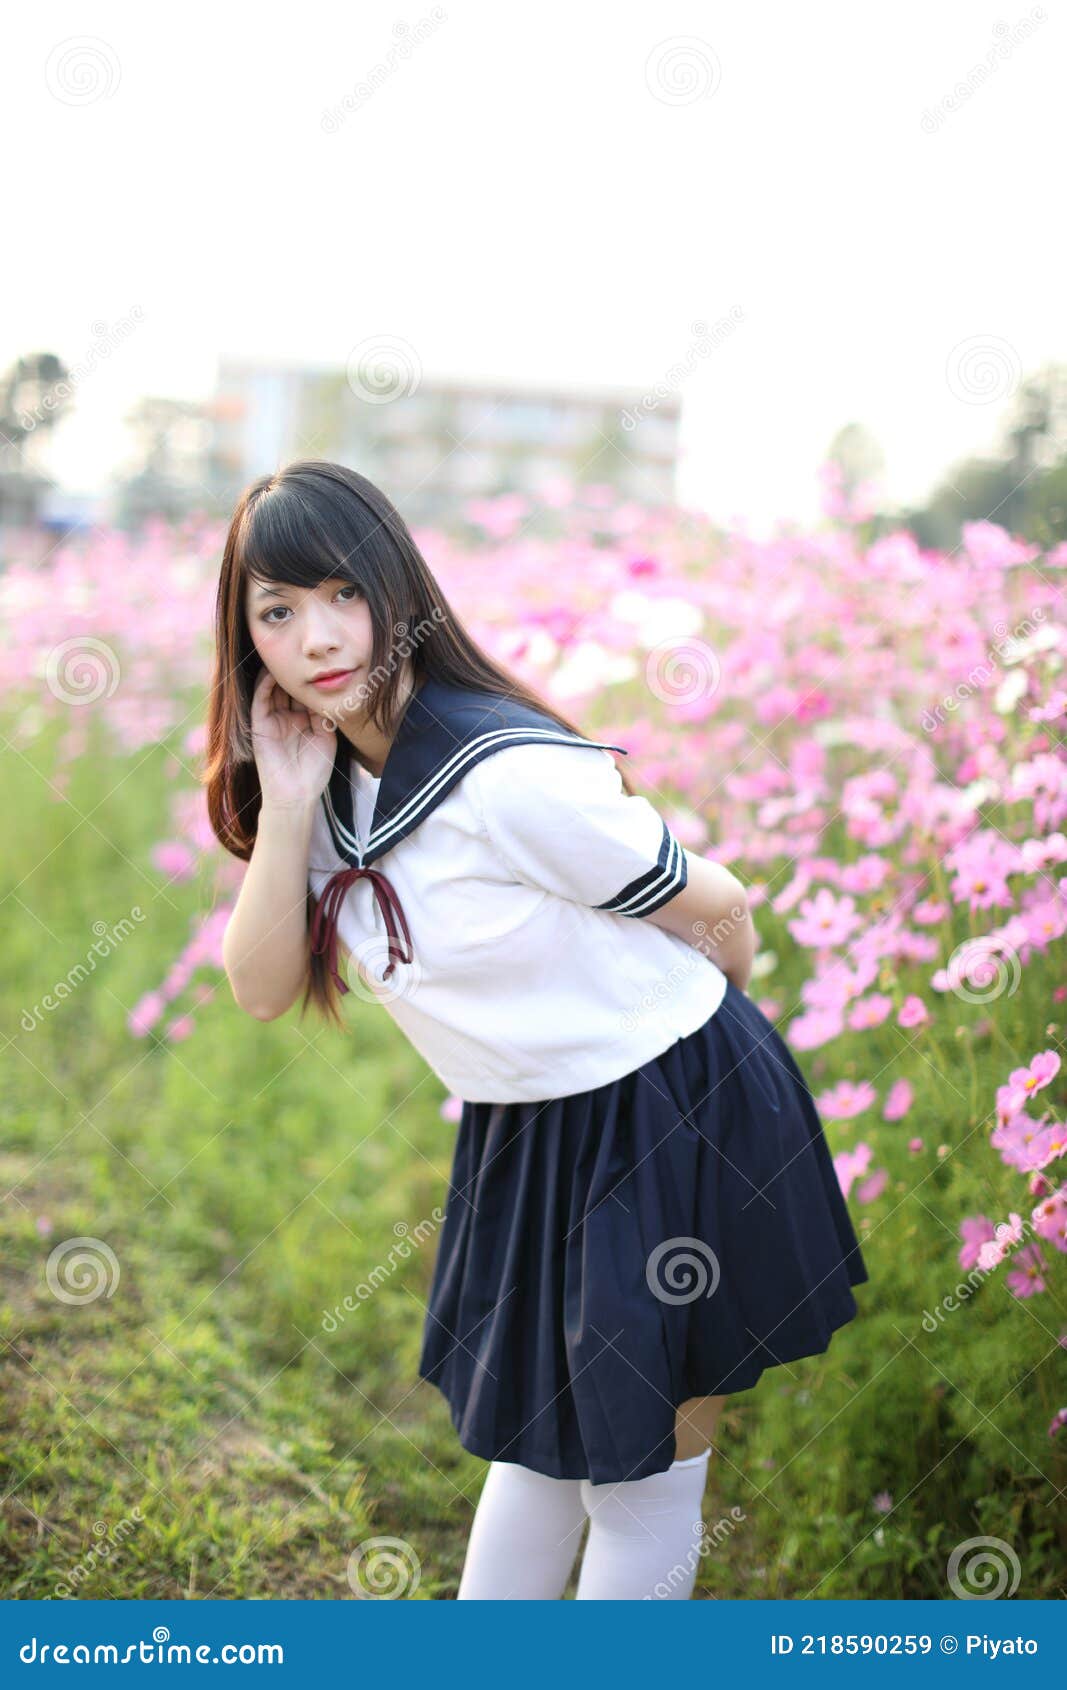 Portrait of Japanese School Girl Uniform Cosmos Flower Stock Image - Image of dress, outdoor: 218590259